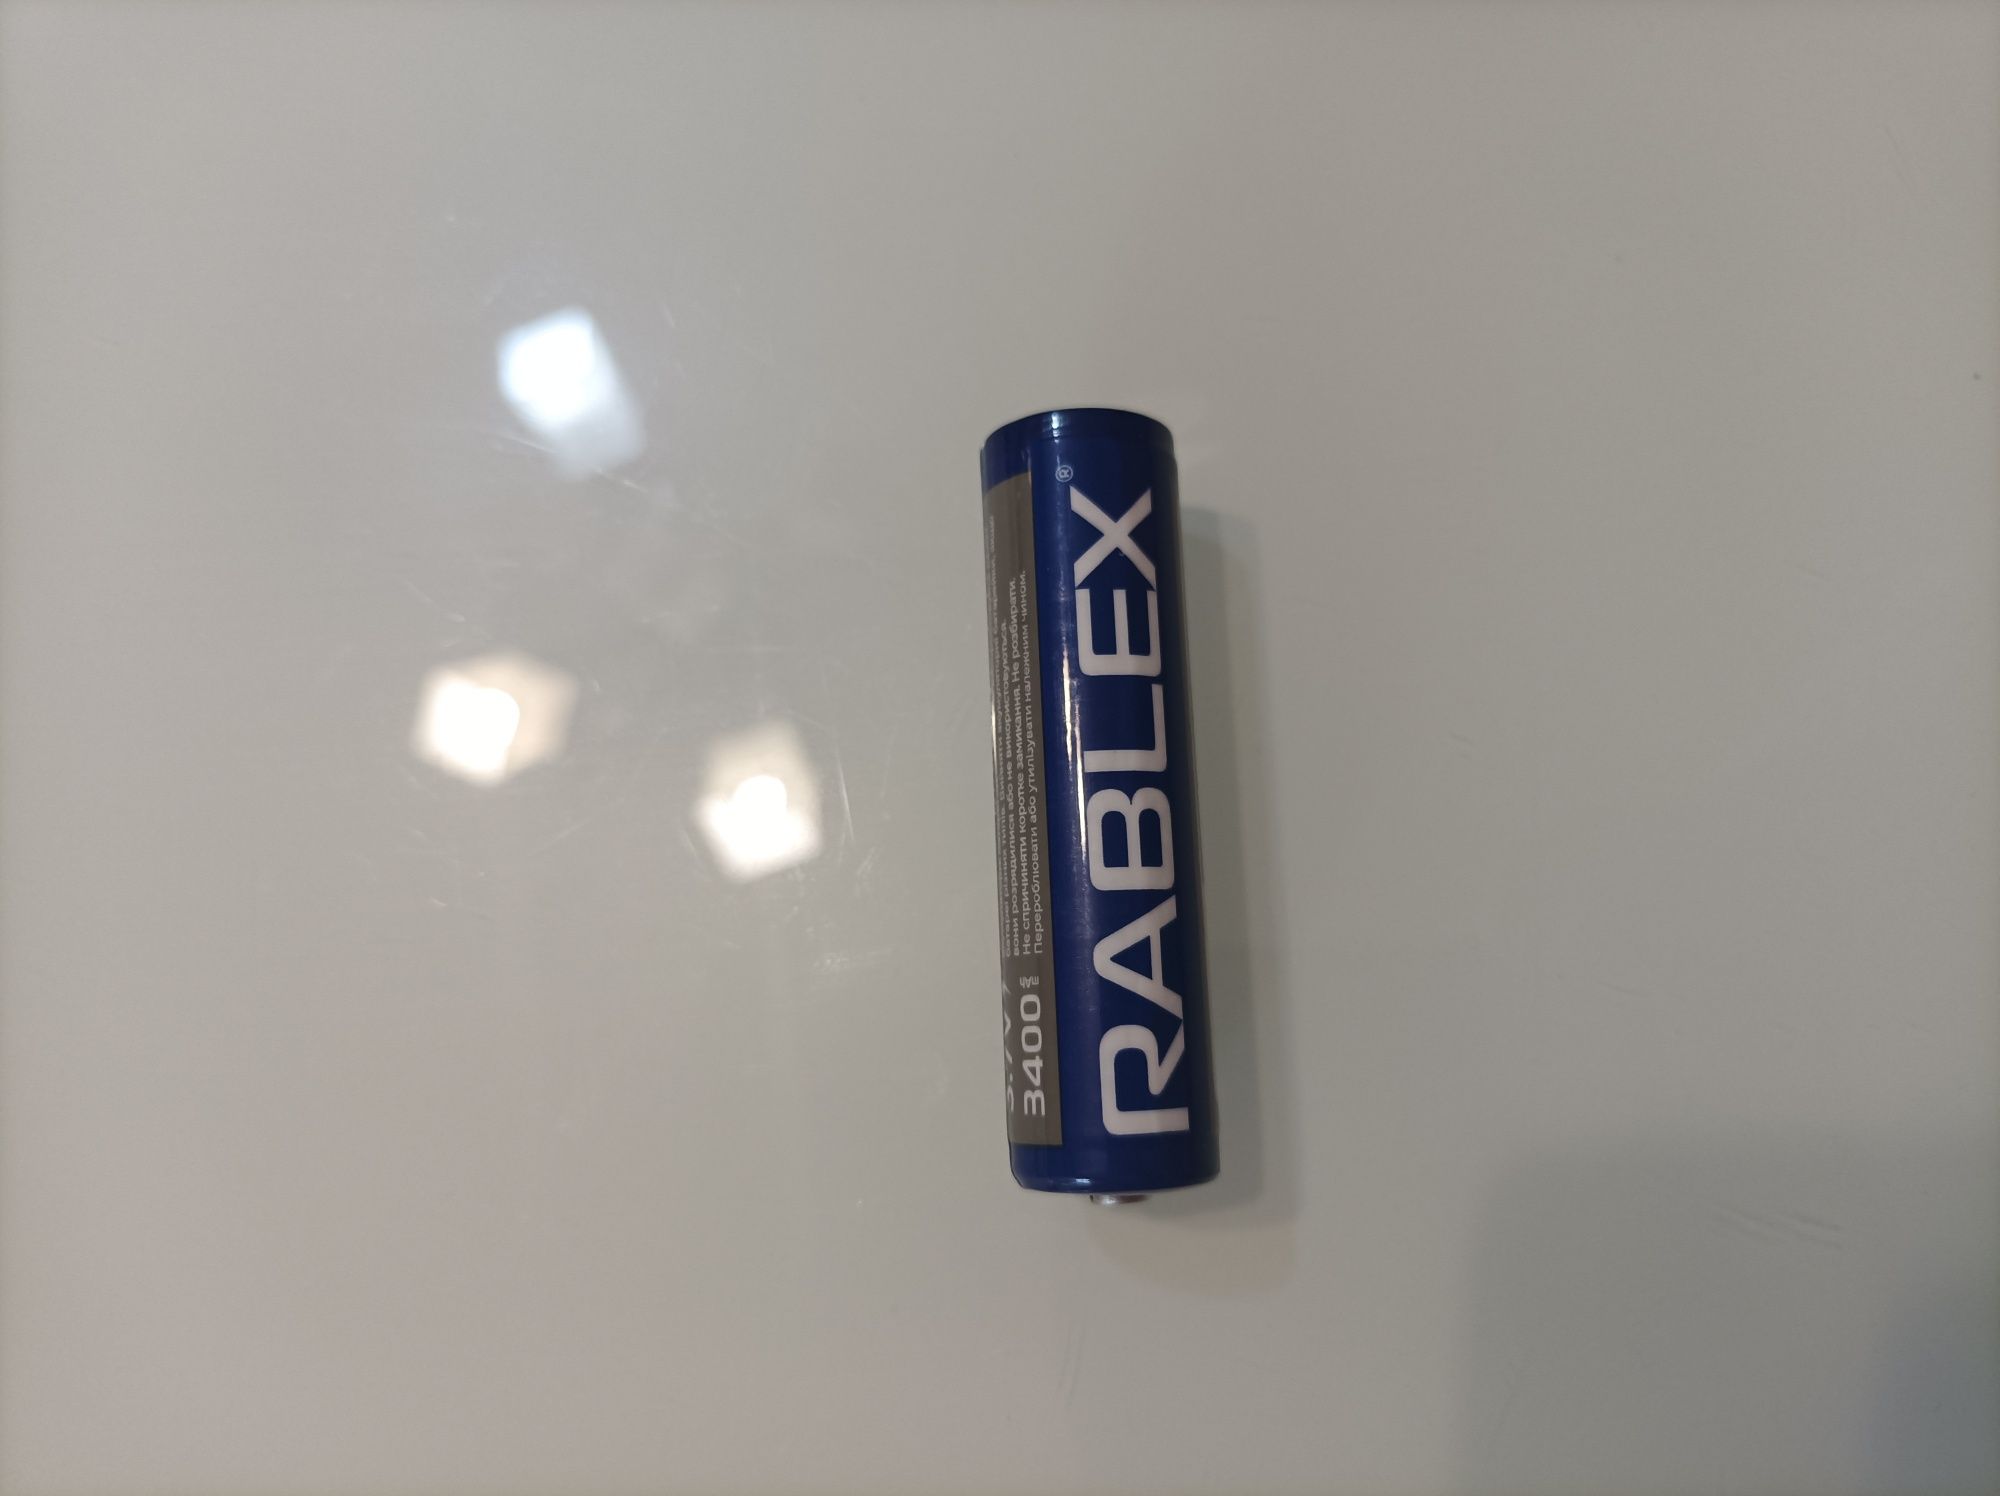 Акумуляторна батарея 18650 Rablex